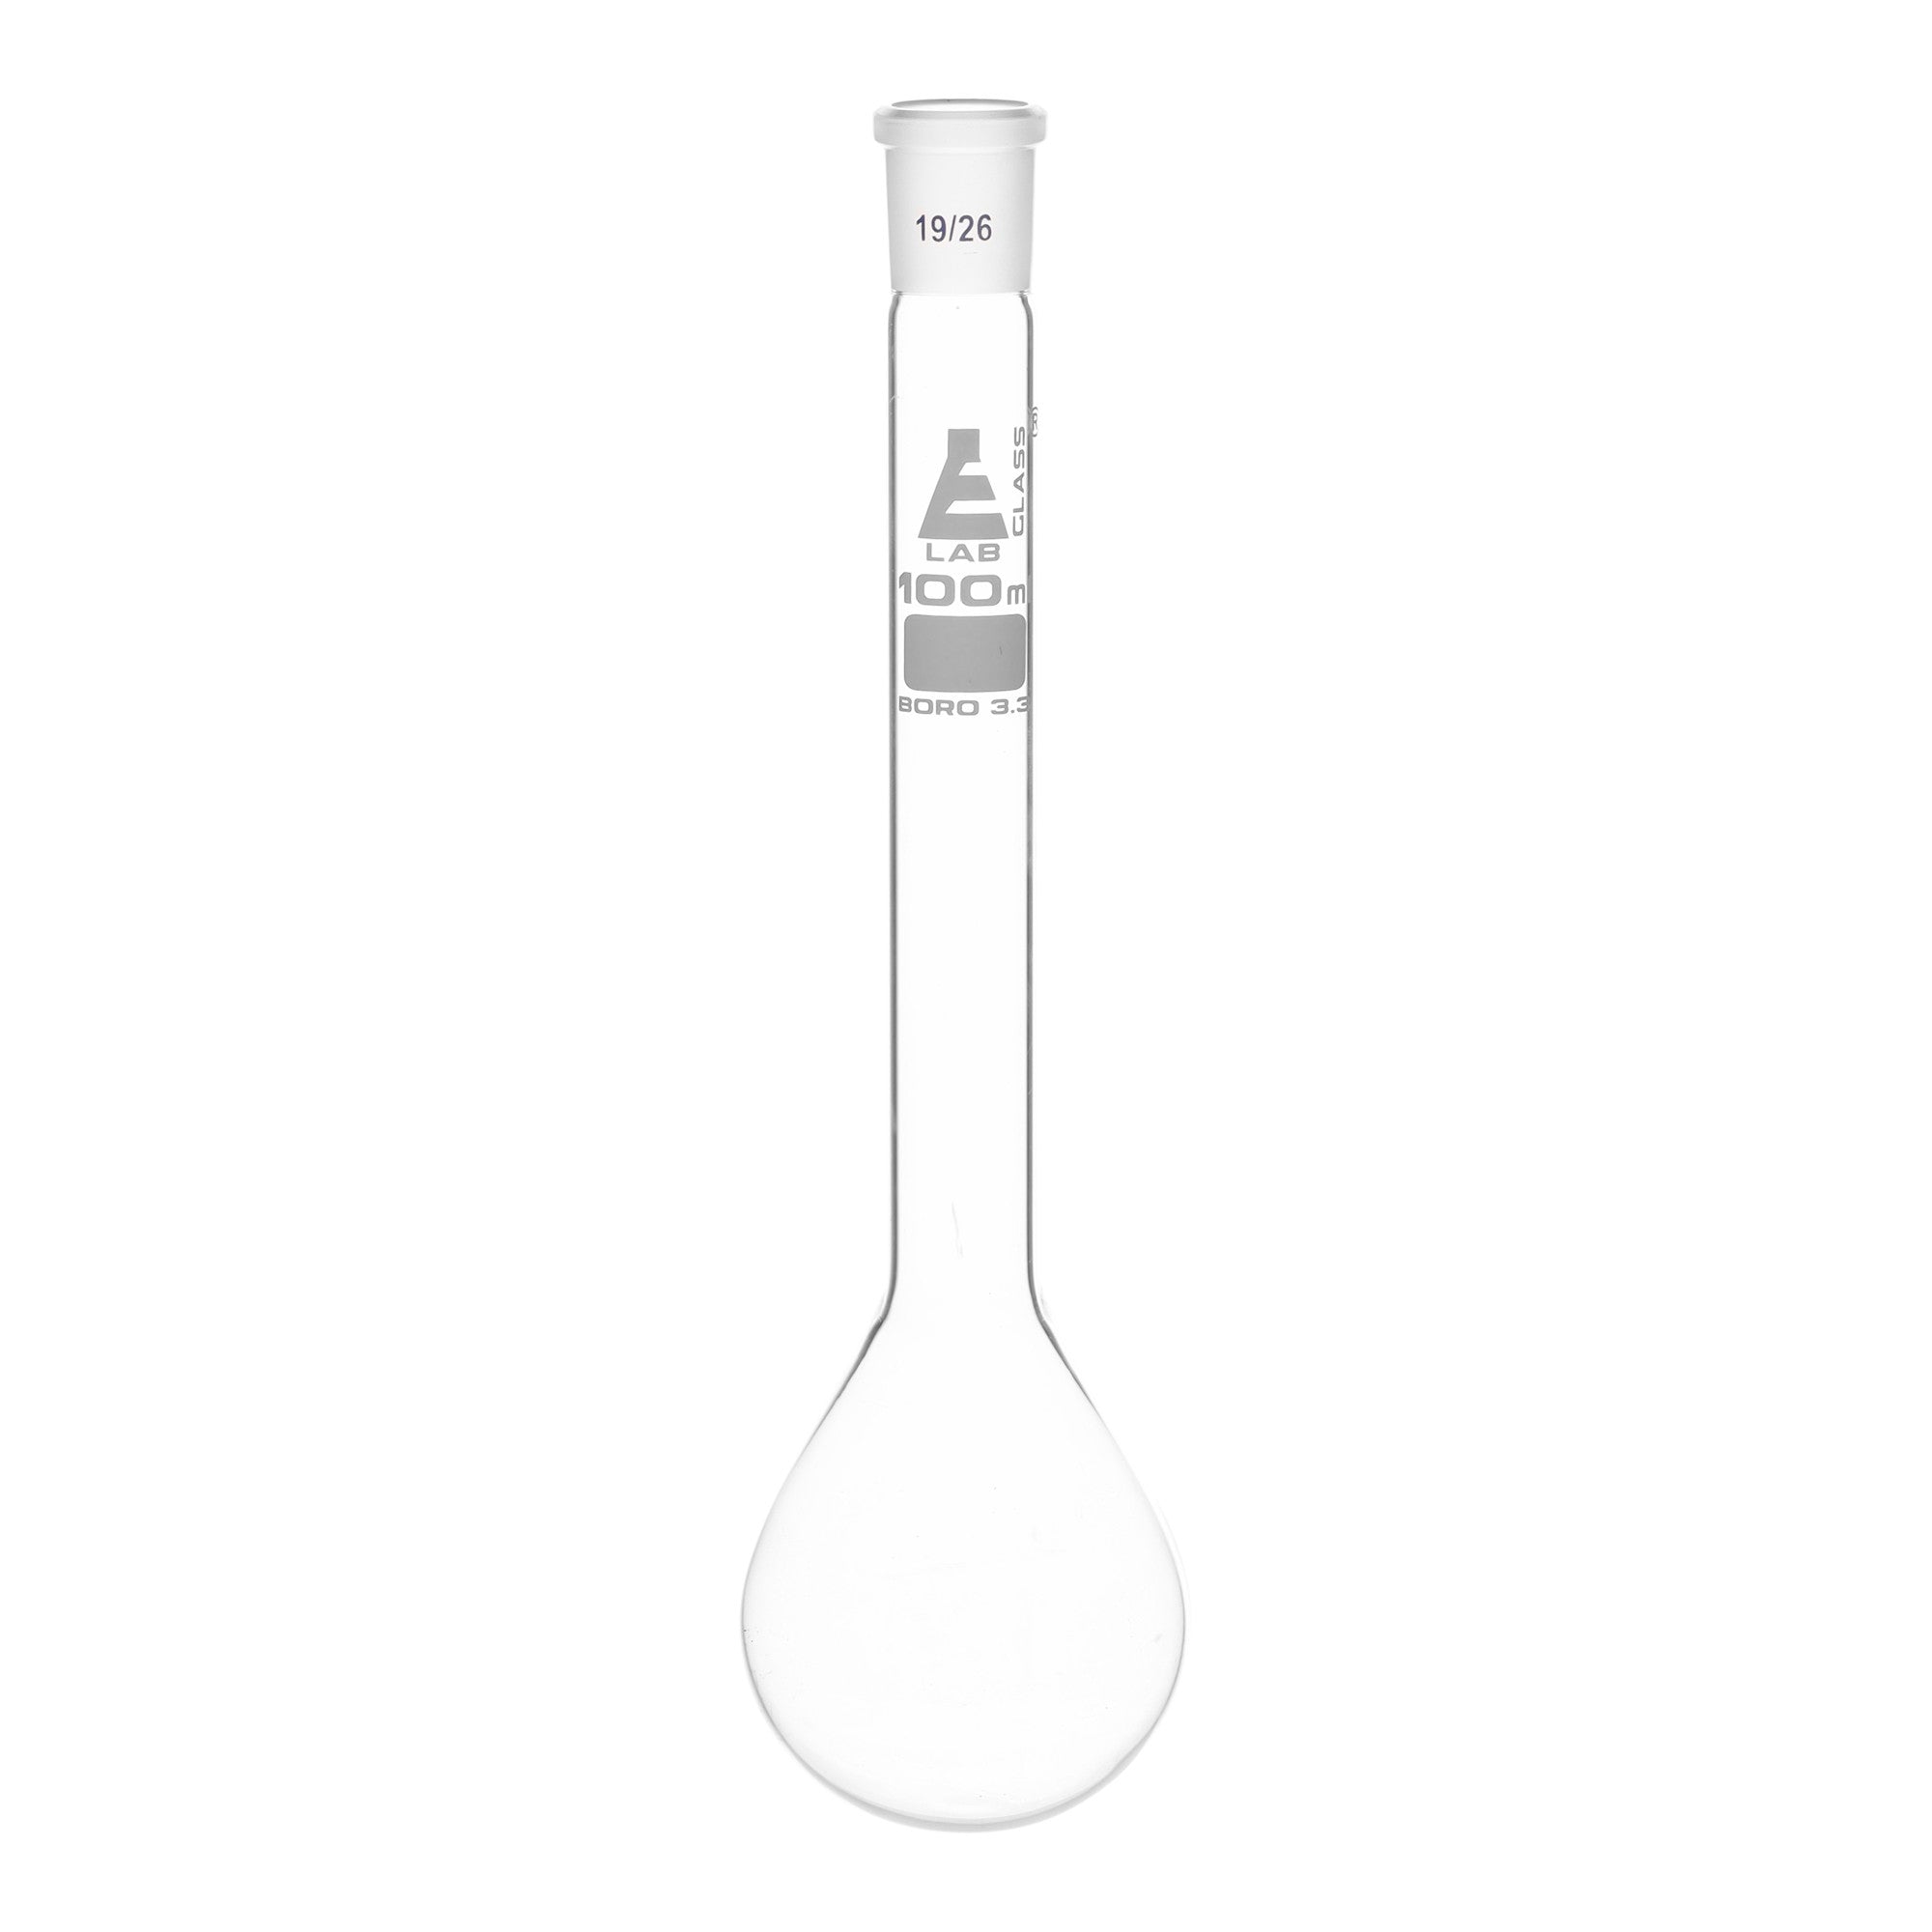 Borosilicate Kjeldahl Flask with Standard Ground Joint 19/26, 100 ml, Autoclavable